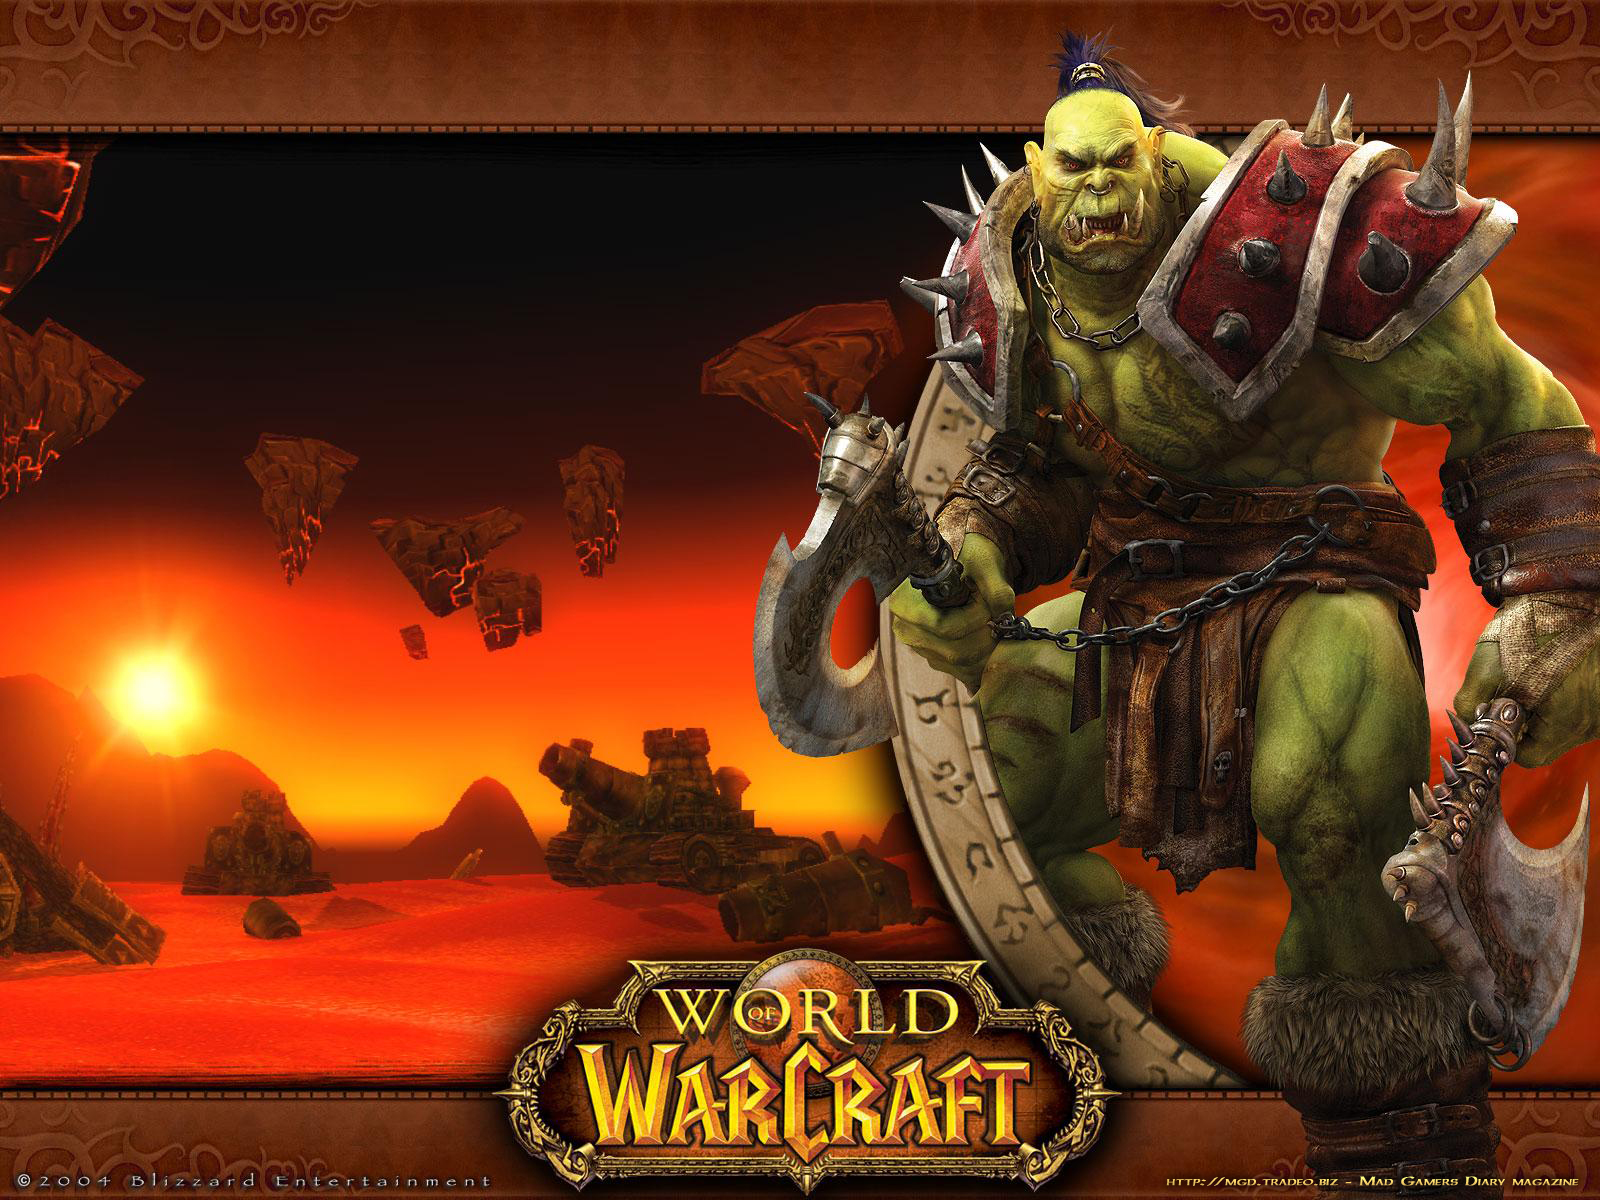  World of Warcraft Wallpaper